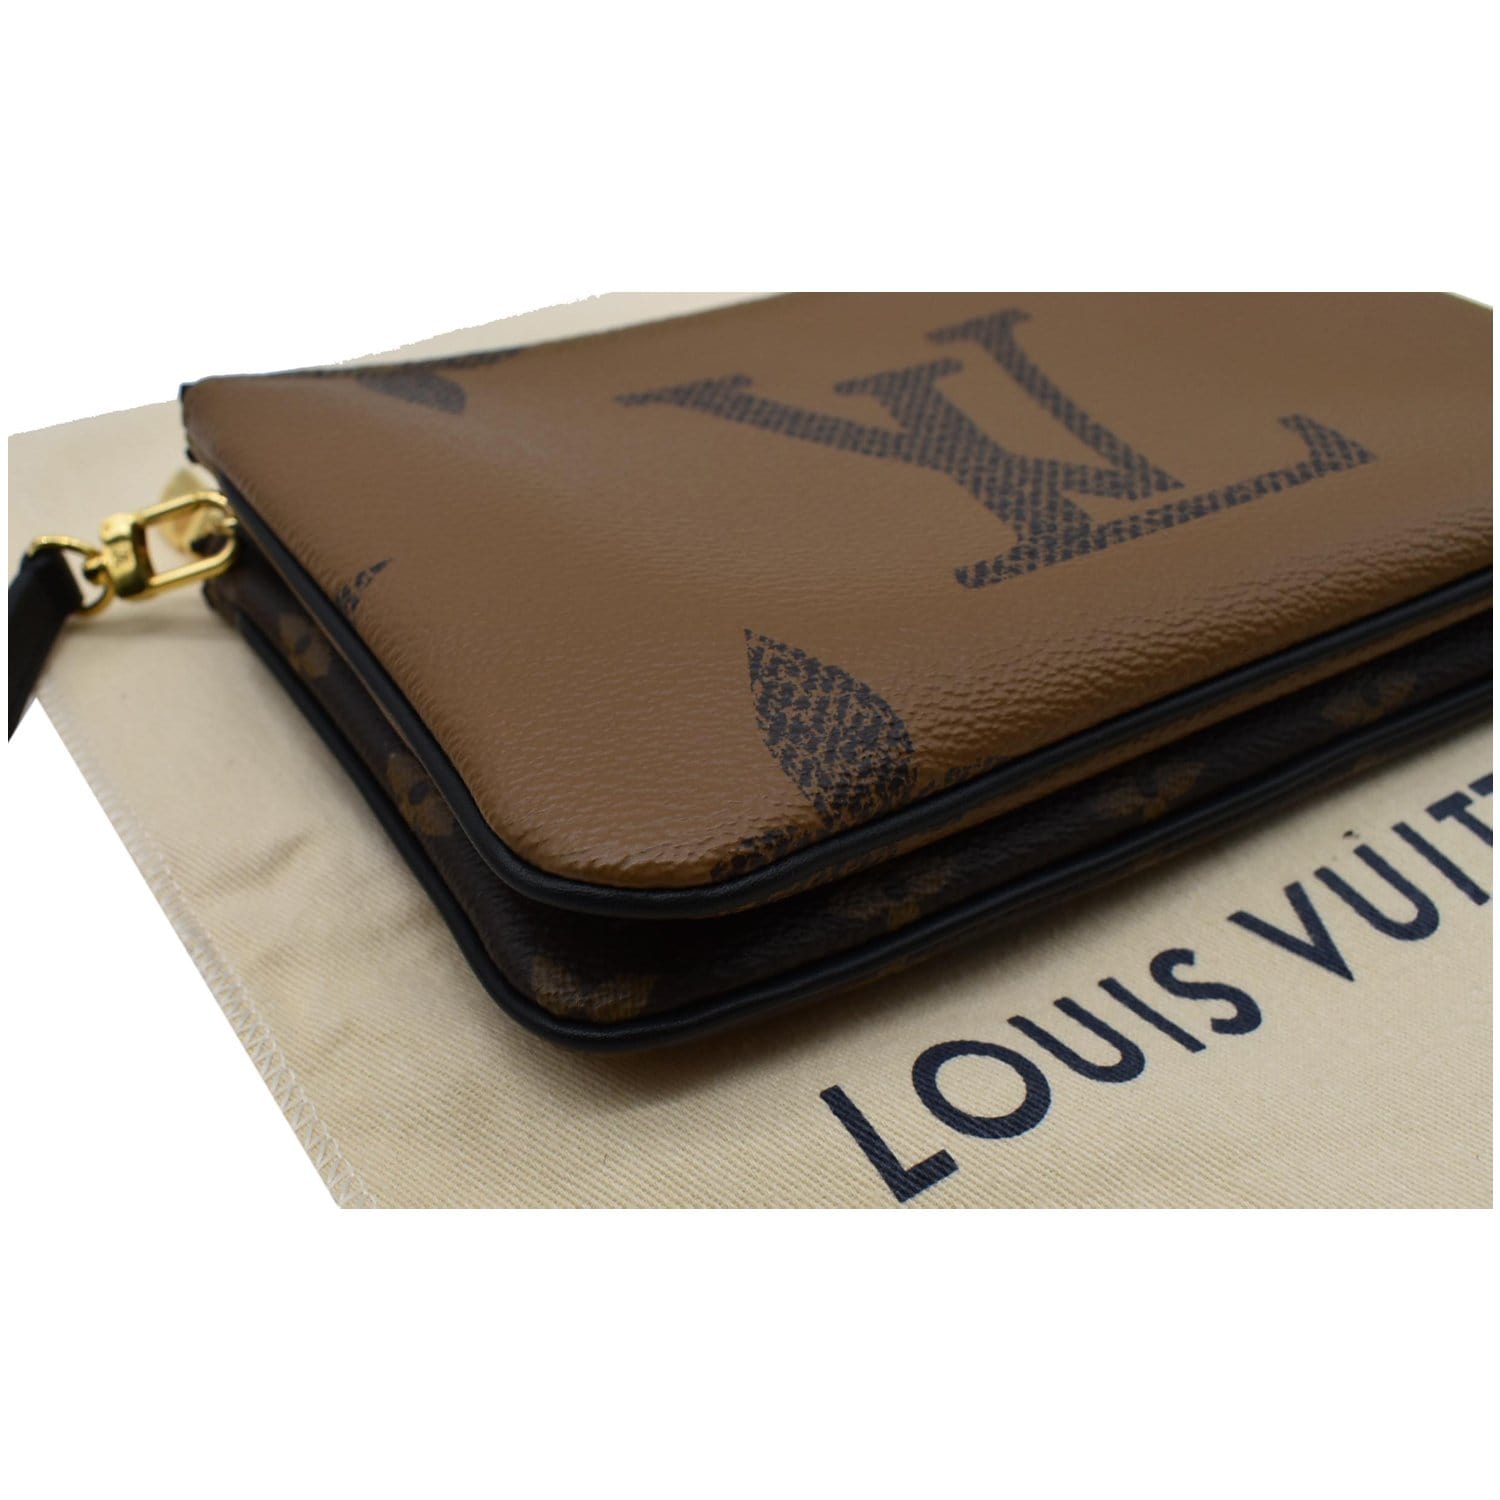 Louis Vuitton 2020 Monogram Giant Reverse Double Zip Pochette w